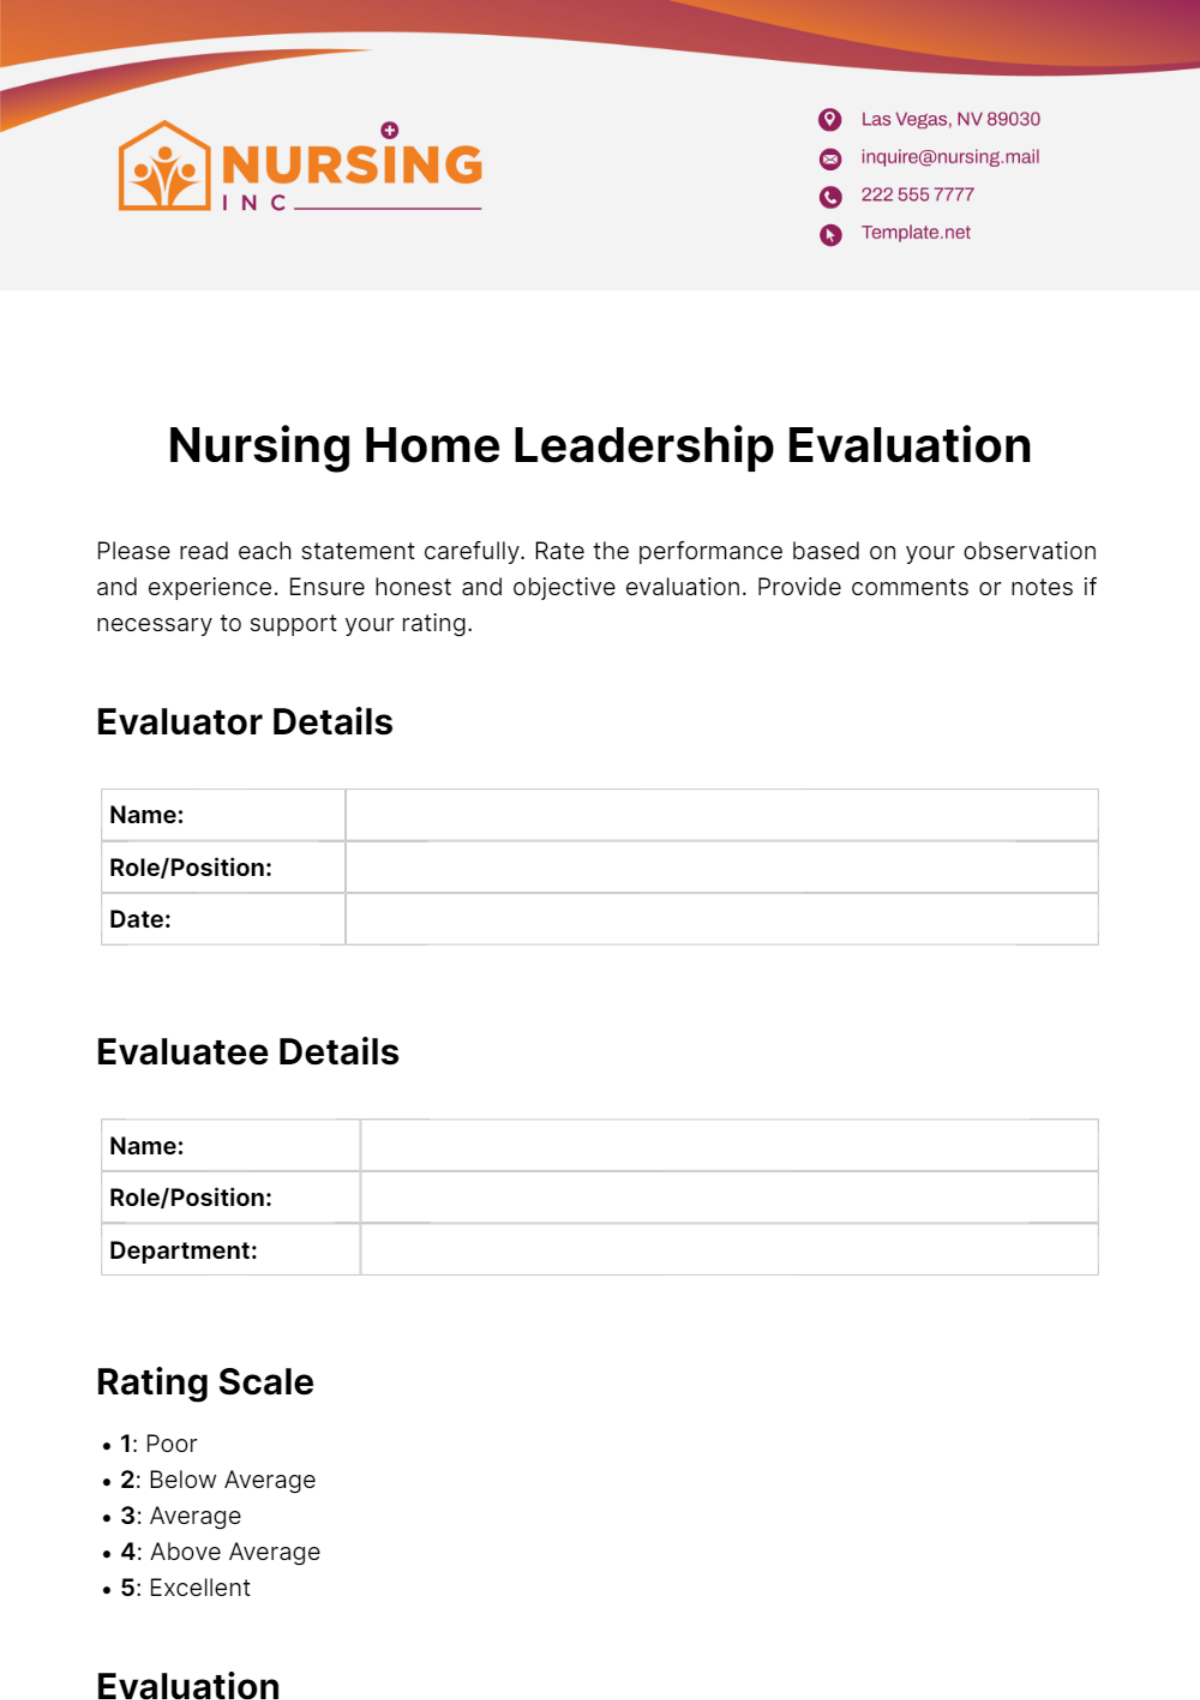 Nursing Home Leadership Evaluation Template